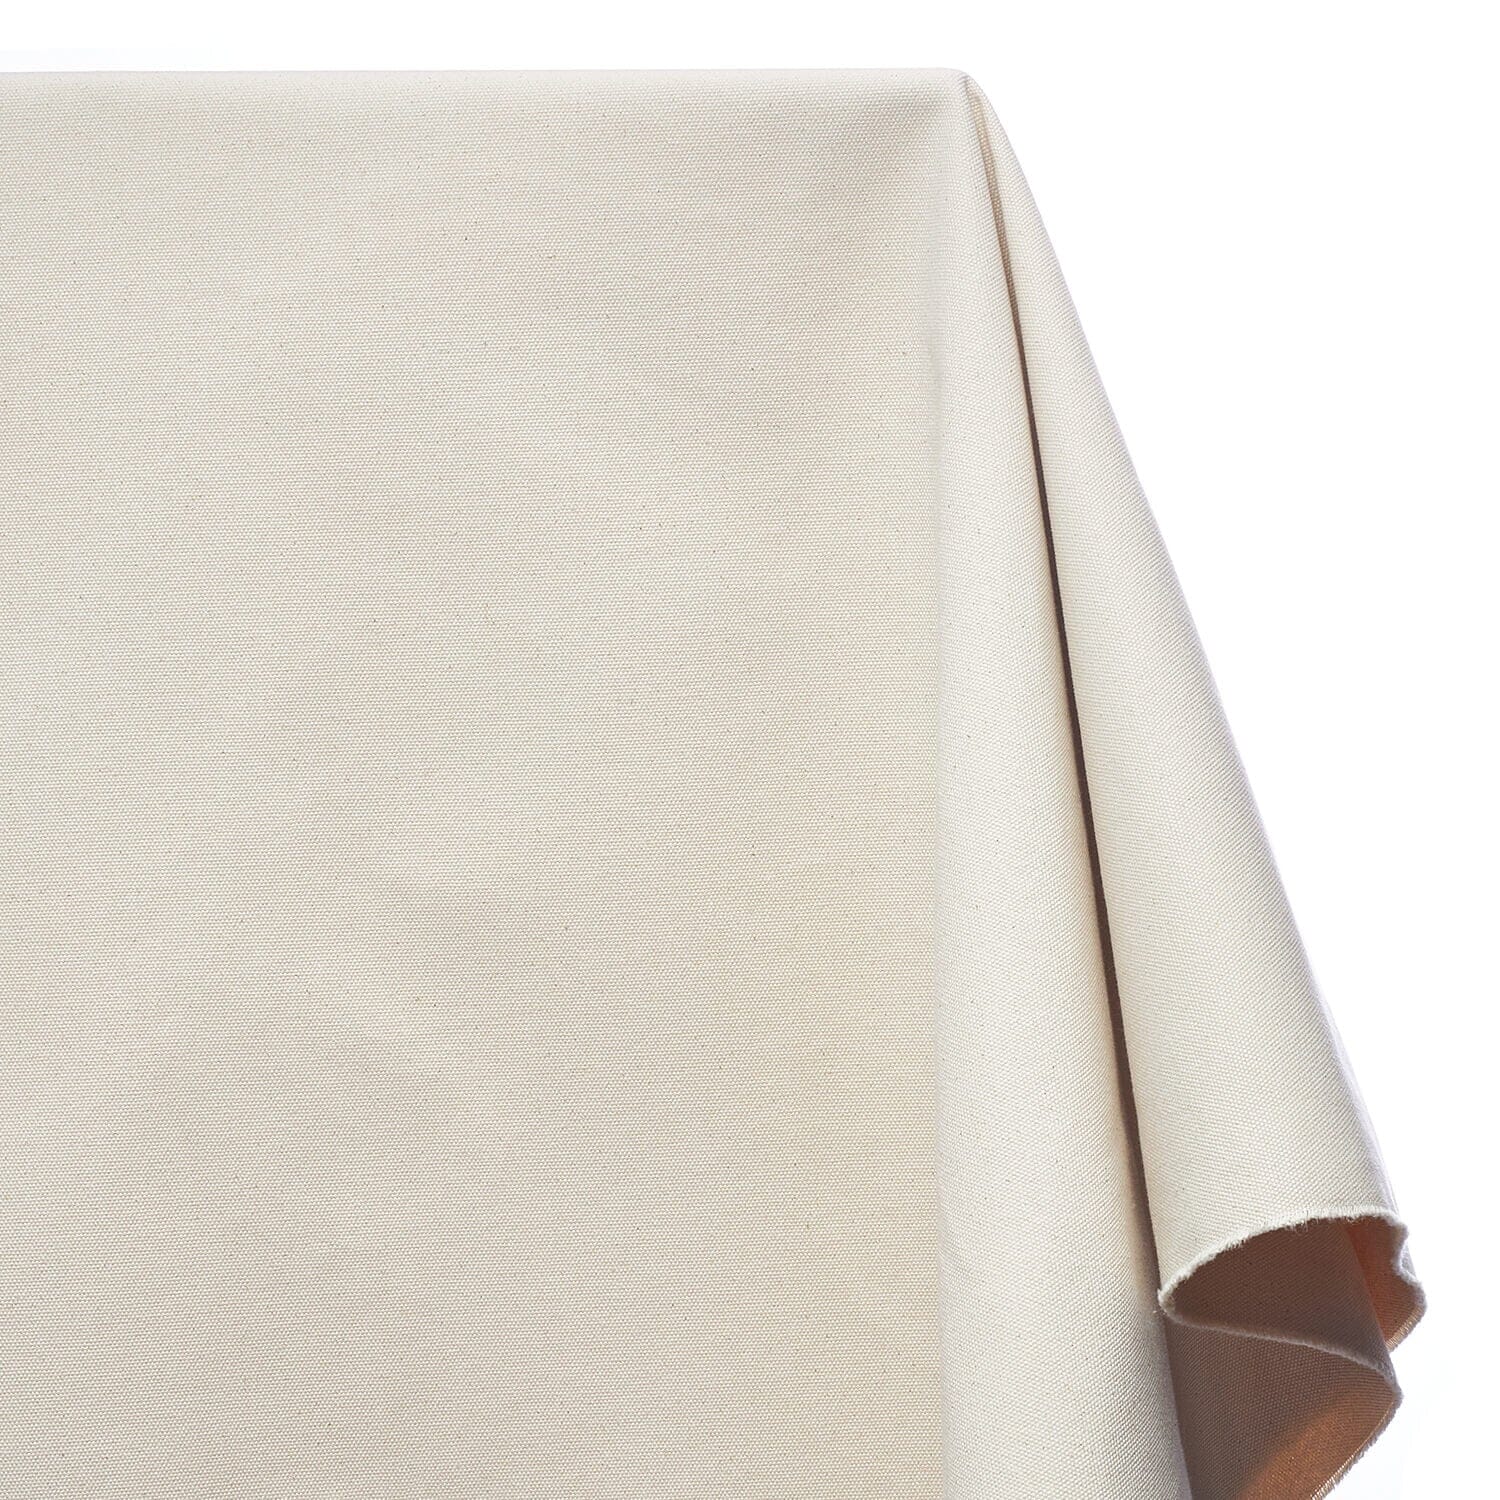 10 Oz White Cotton Canvas Fabric